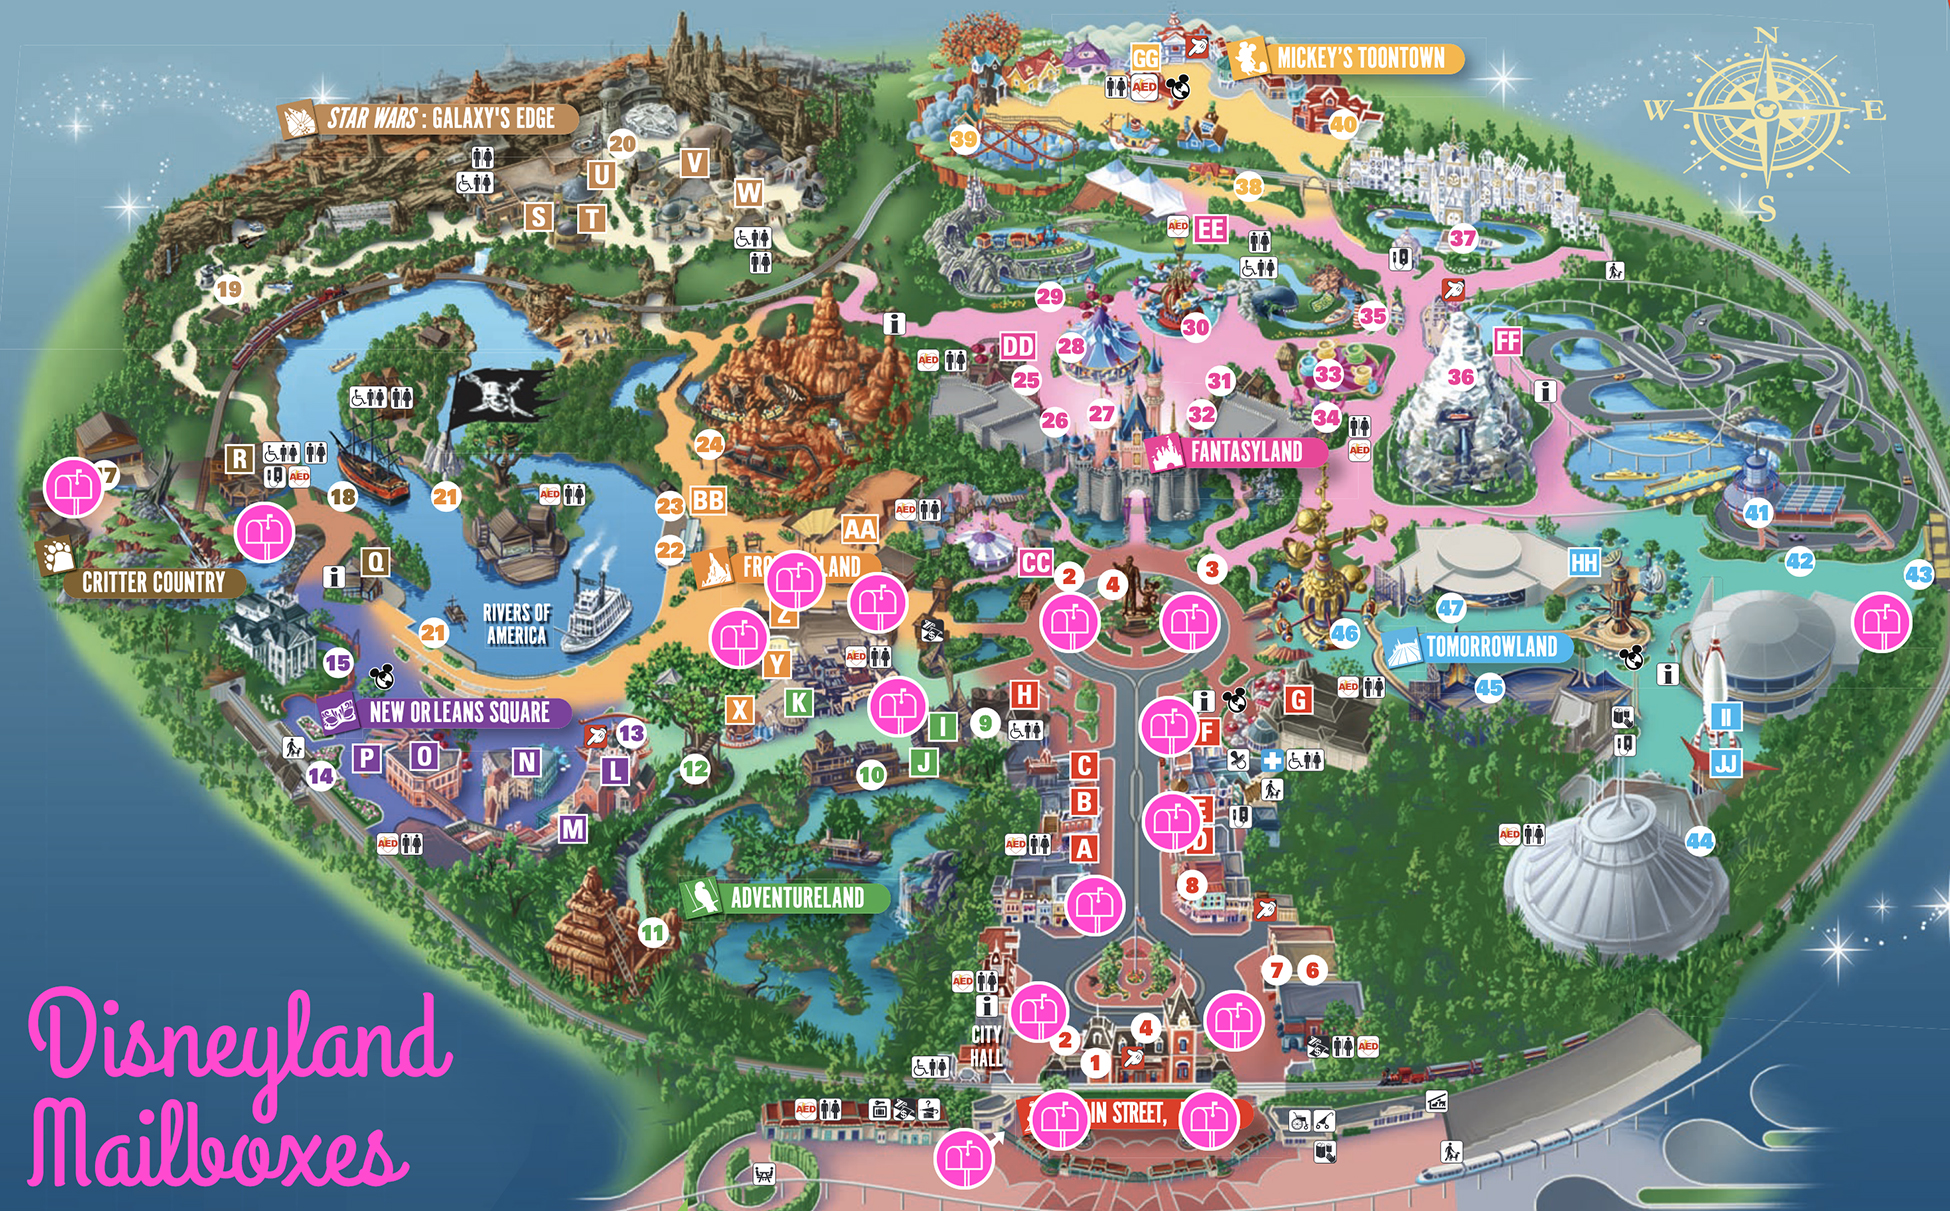 Disneyland Map of Mailboxes